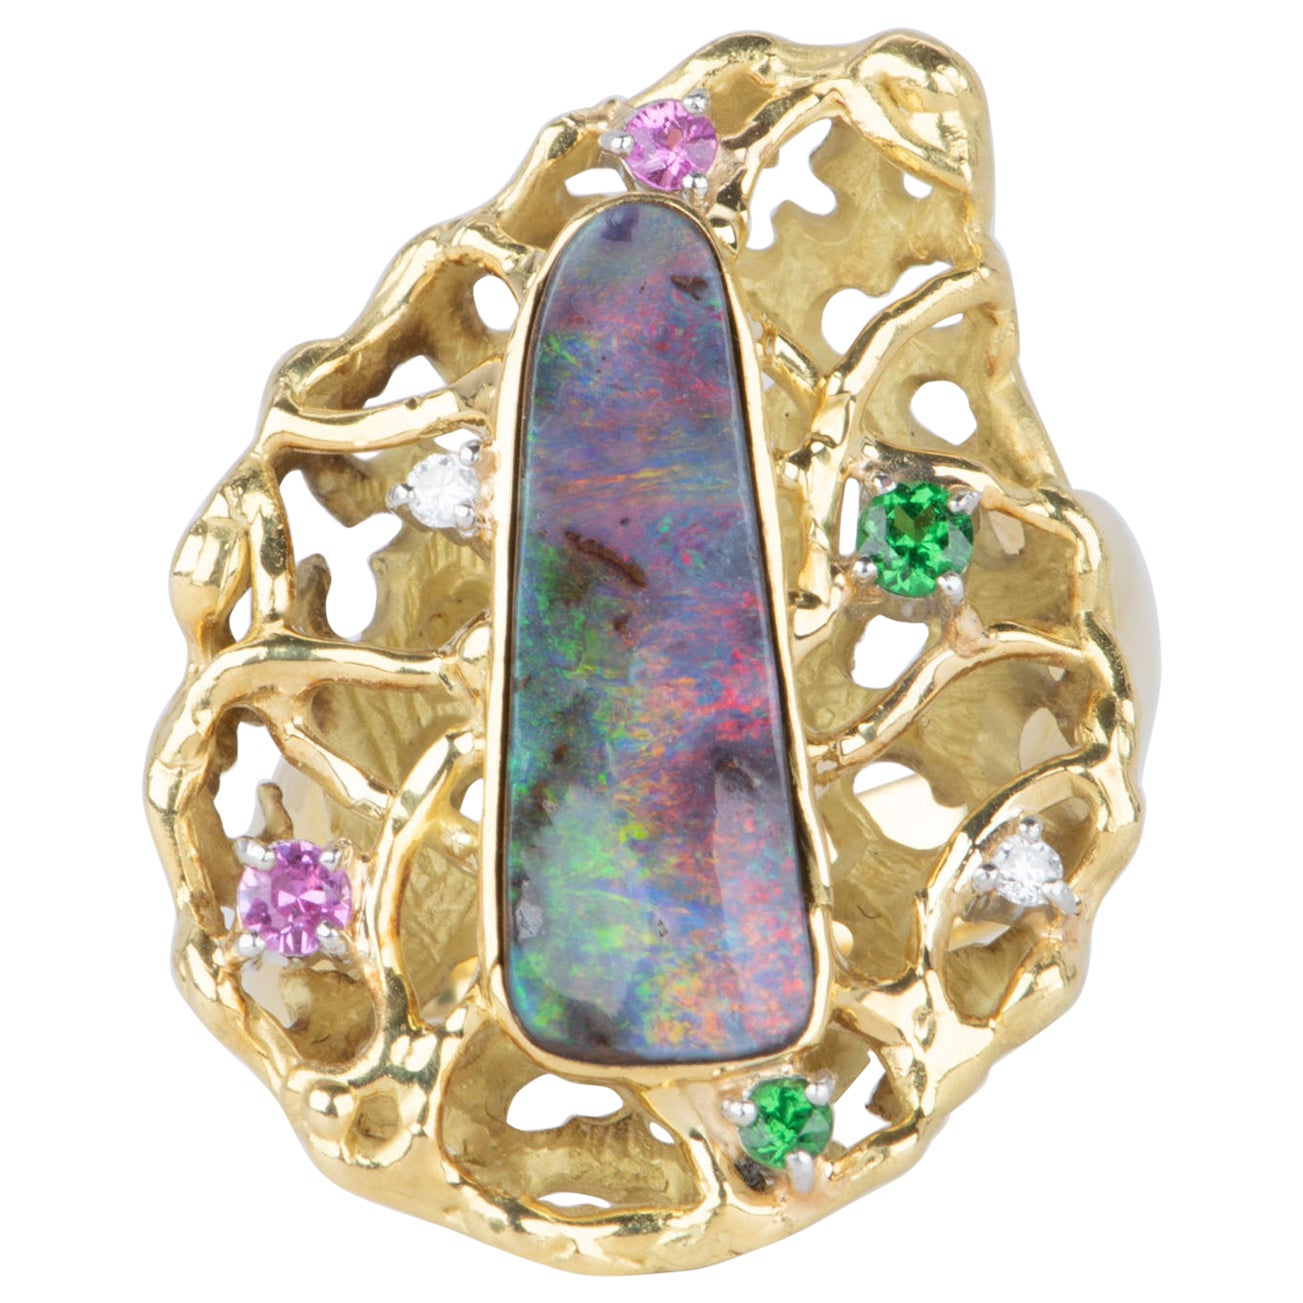 Australian Boulder Opal Modernist Design Statement Ring 18K Gold 14.2g V1112